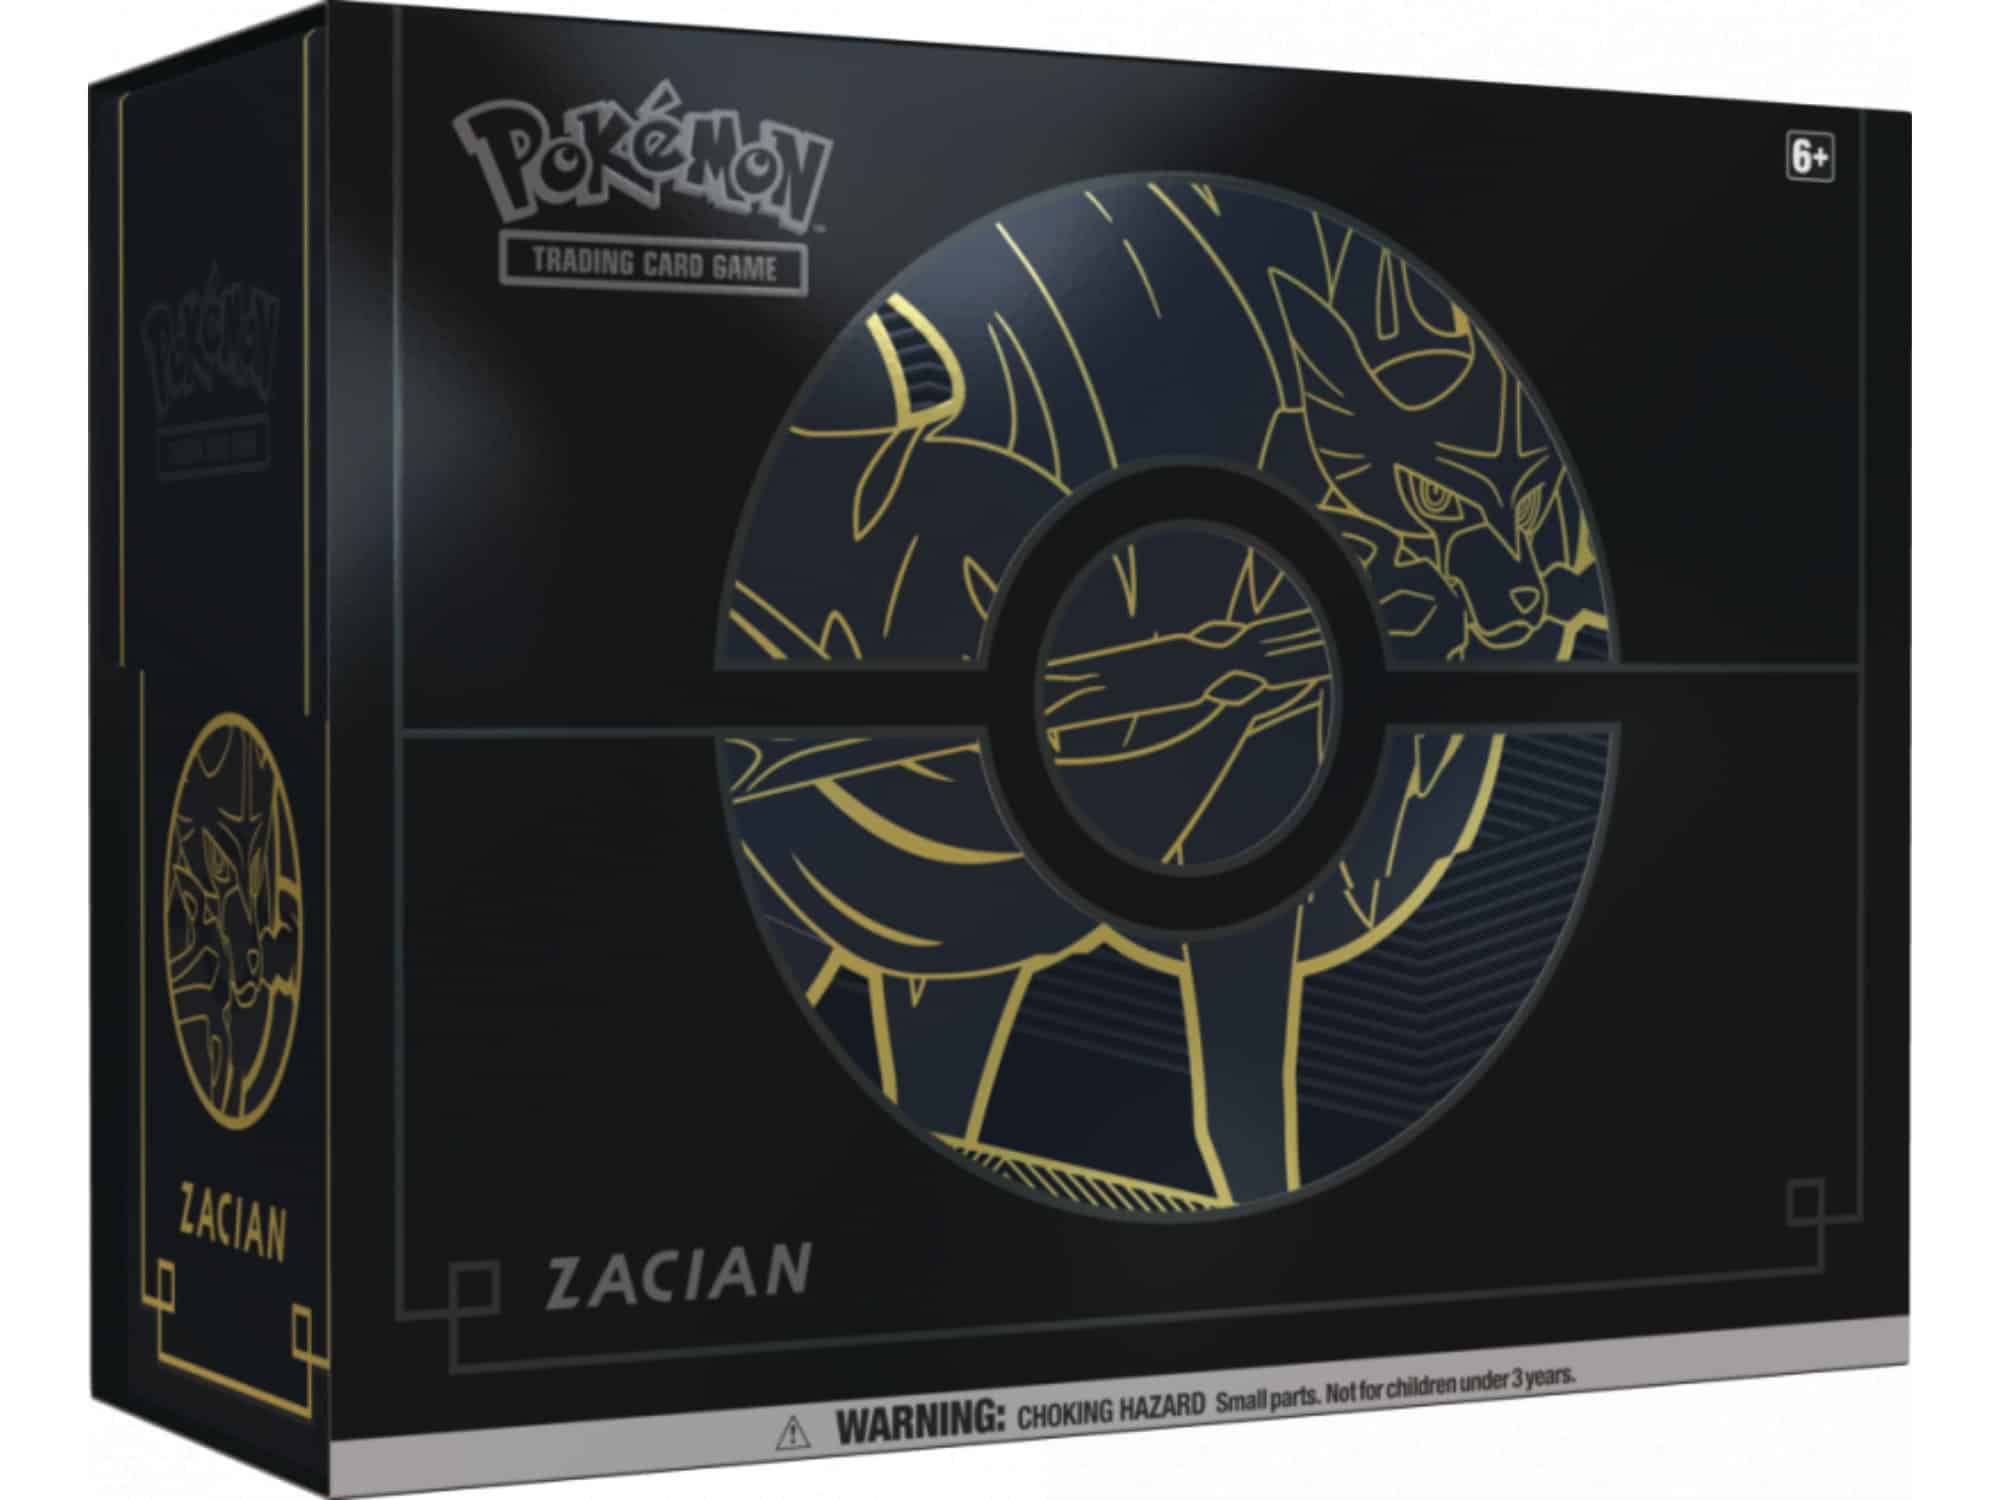 Pokémon - Elite Trainer Box Plus (Zacian)